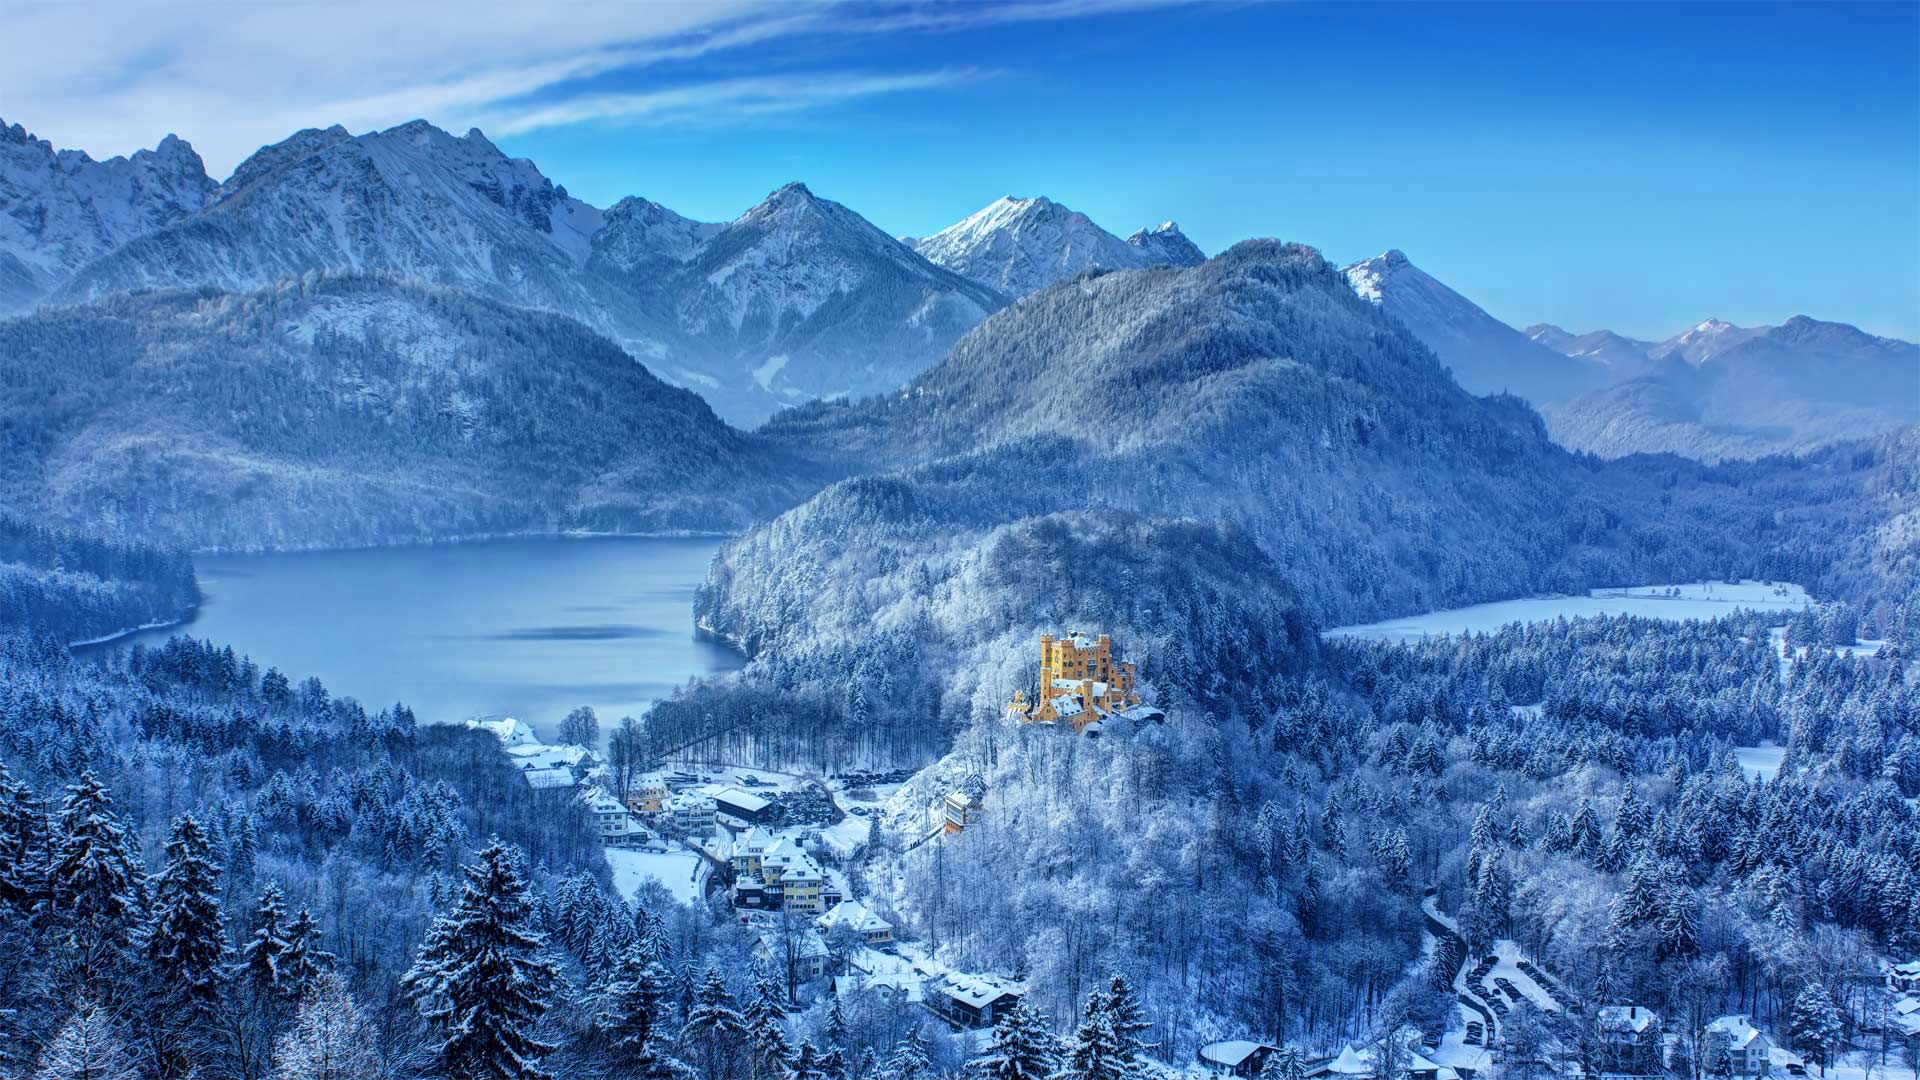 Hohenschwangau Castle, Bavaria, Germany - Mespilia/Shutterstock)